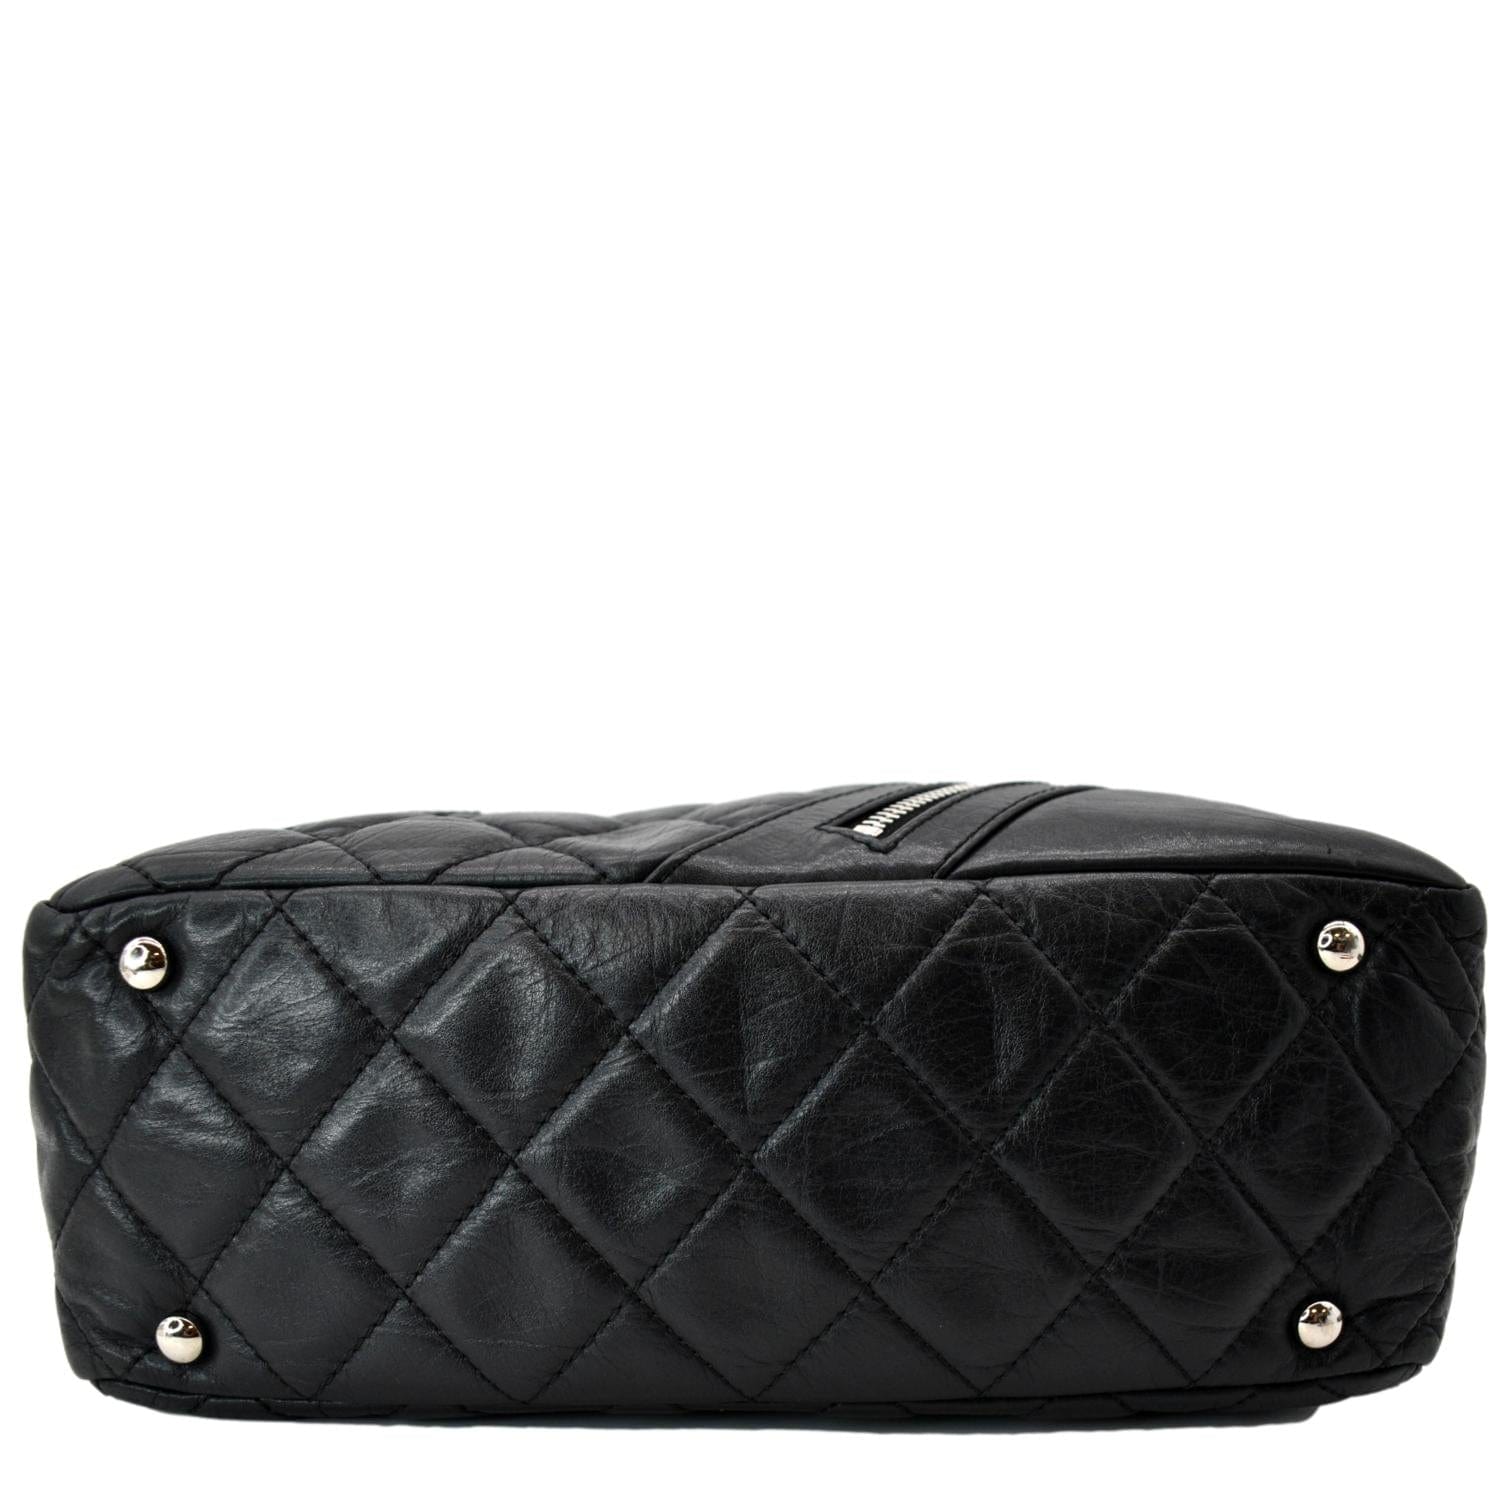 Chanel Chanel Chain Shoulder Bag Leather Black Ladies Auction